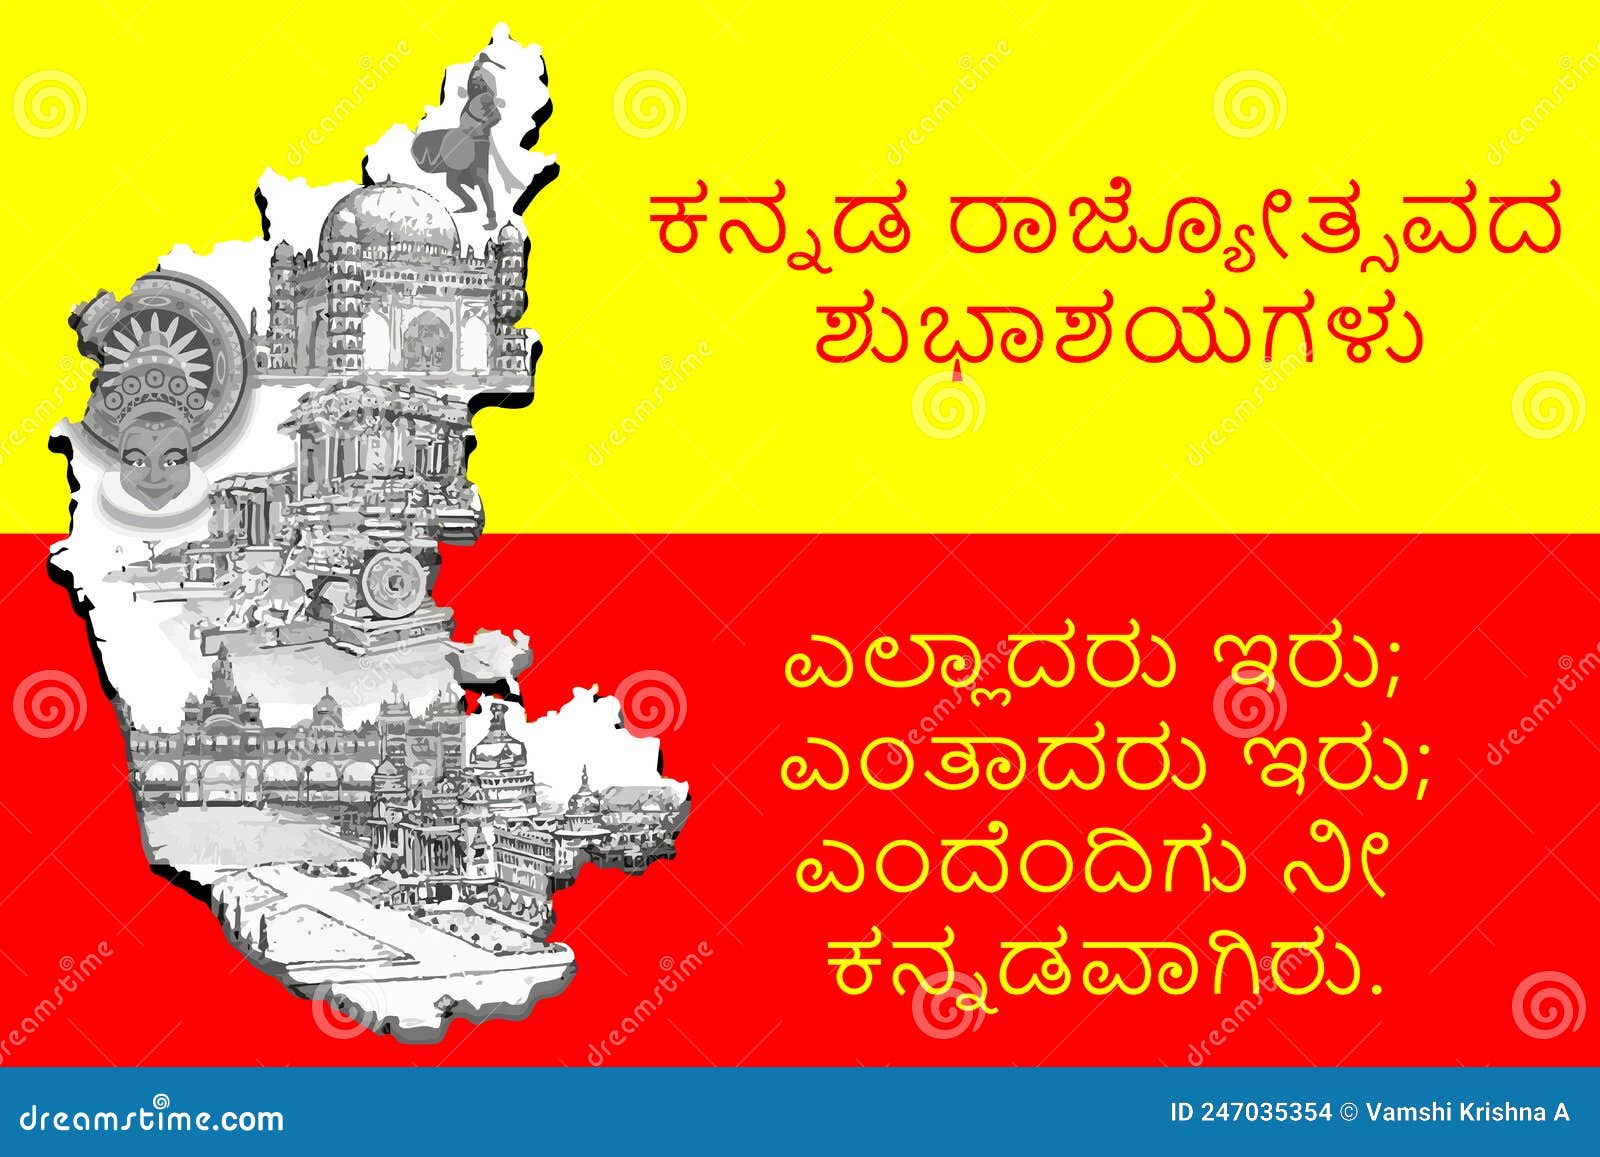 27 Kannada rajyotsava ideas in 2023  kannada rajyotsava quotes happy kannada  rajyotsava images karnataka rajyotsava background